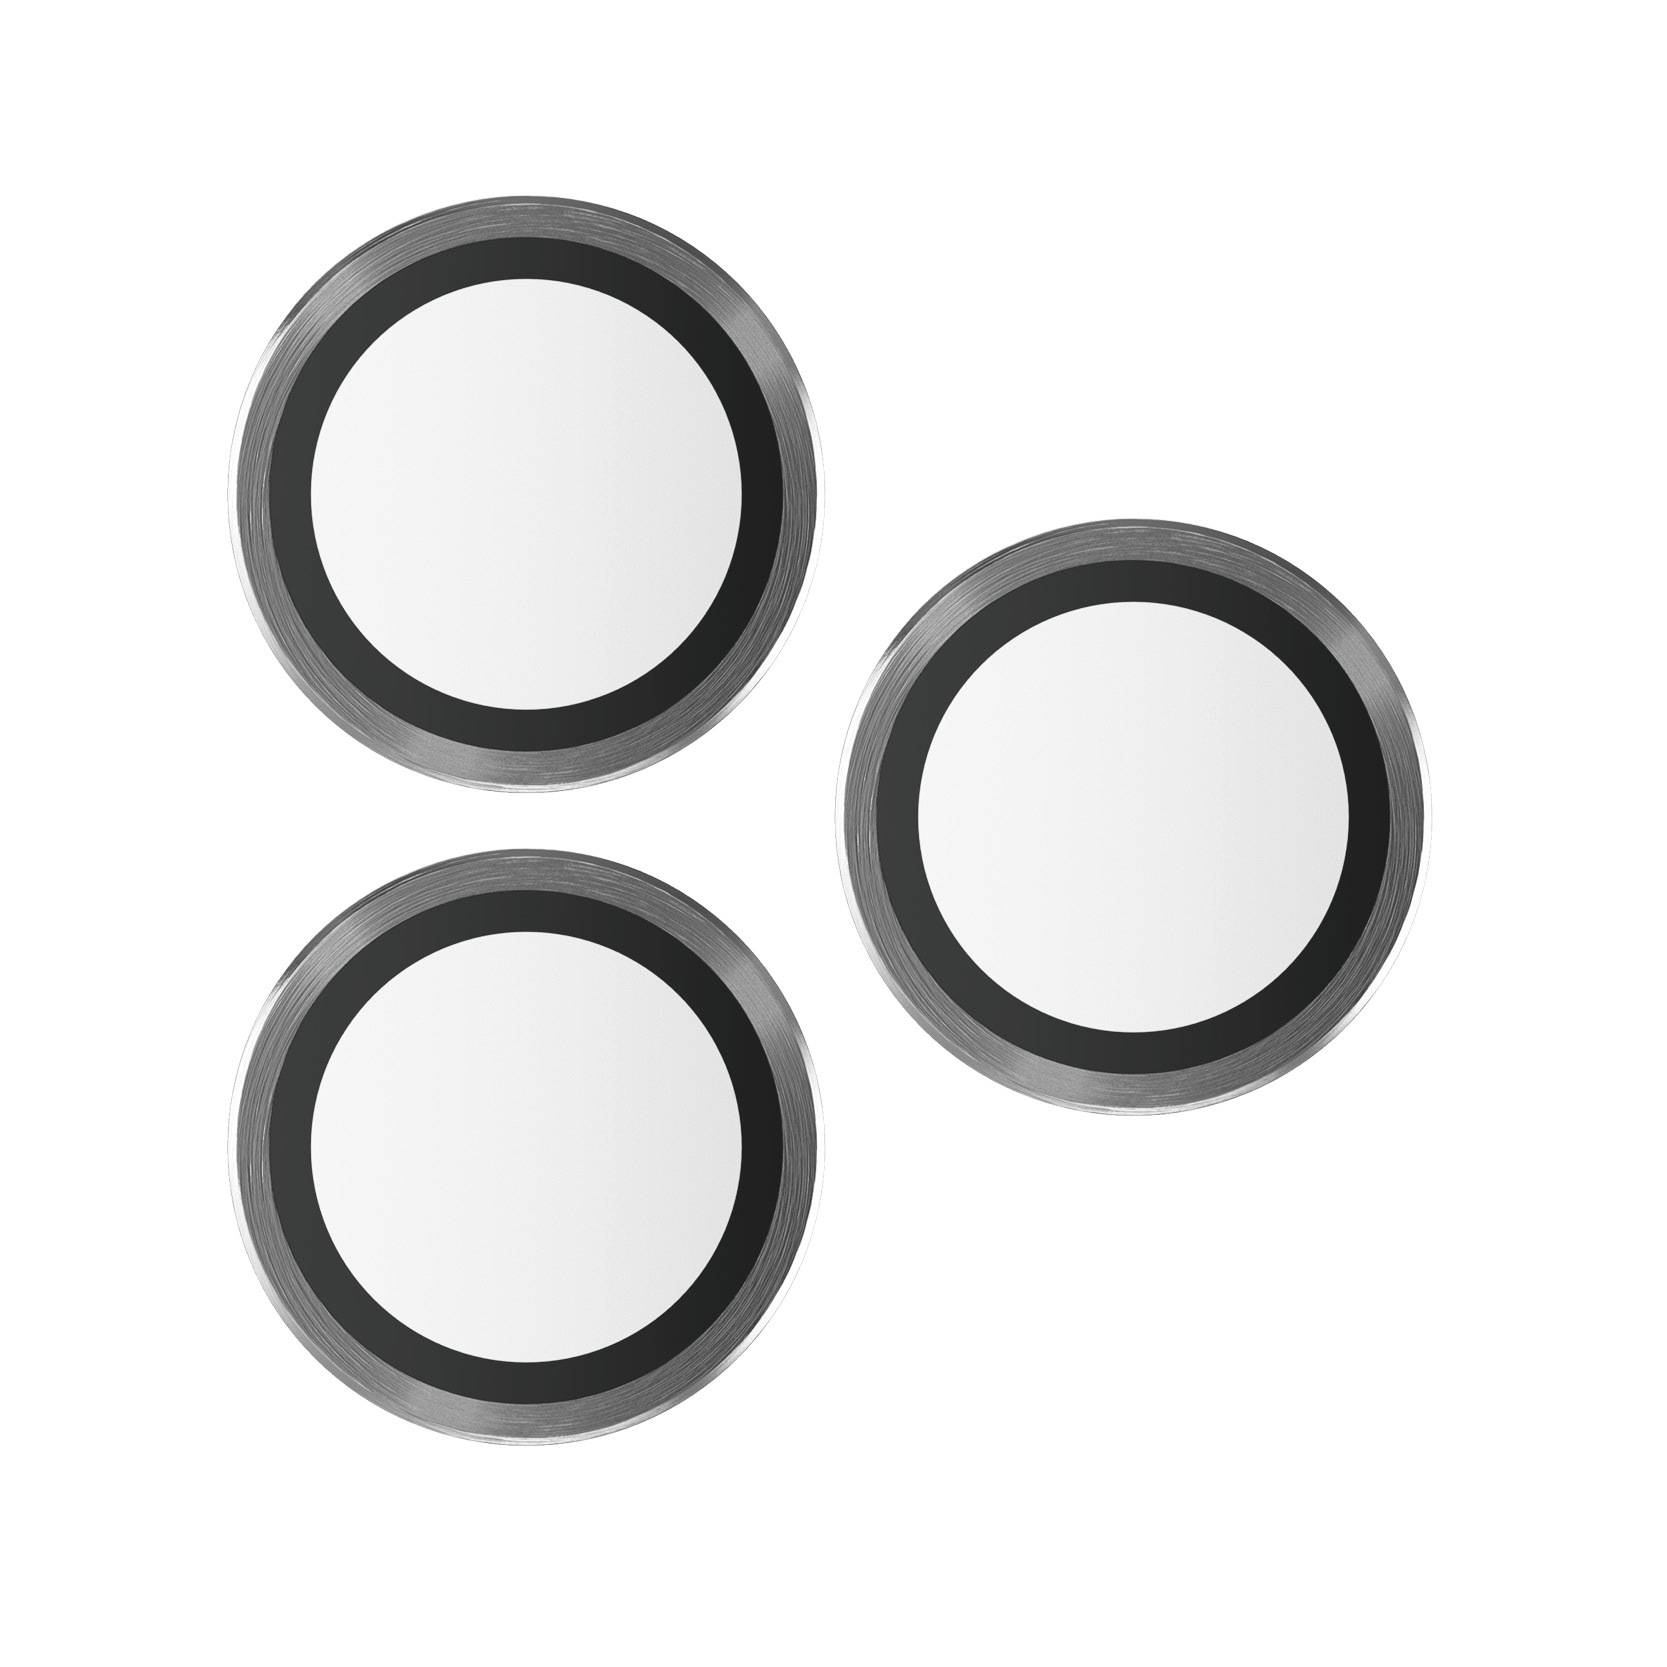 PanzerGlass Kameraschutzglas »Hoops Camera Lens Protector«, für Apple iPhone 13 Pro-Apple iPhone 13 Pro Max, (1 St.), Kameraschutz, Schutzglas, Einfach anbringen, kratz- & stoßfest